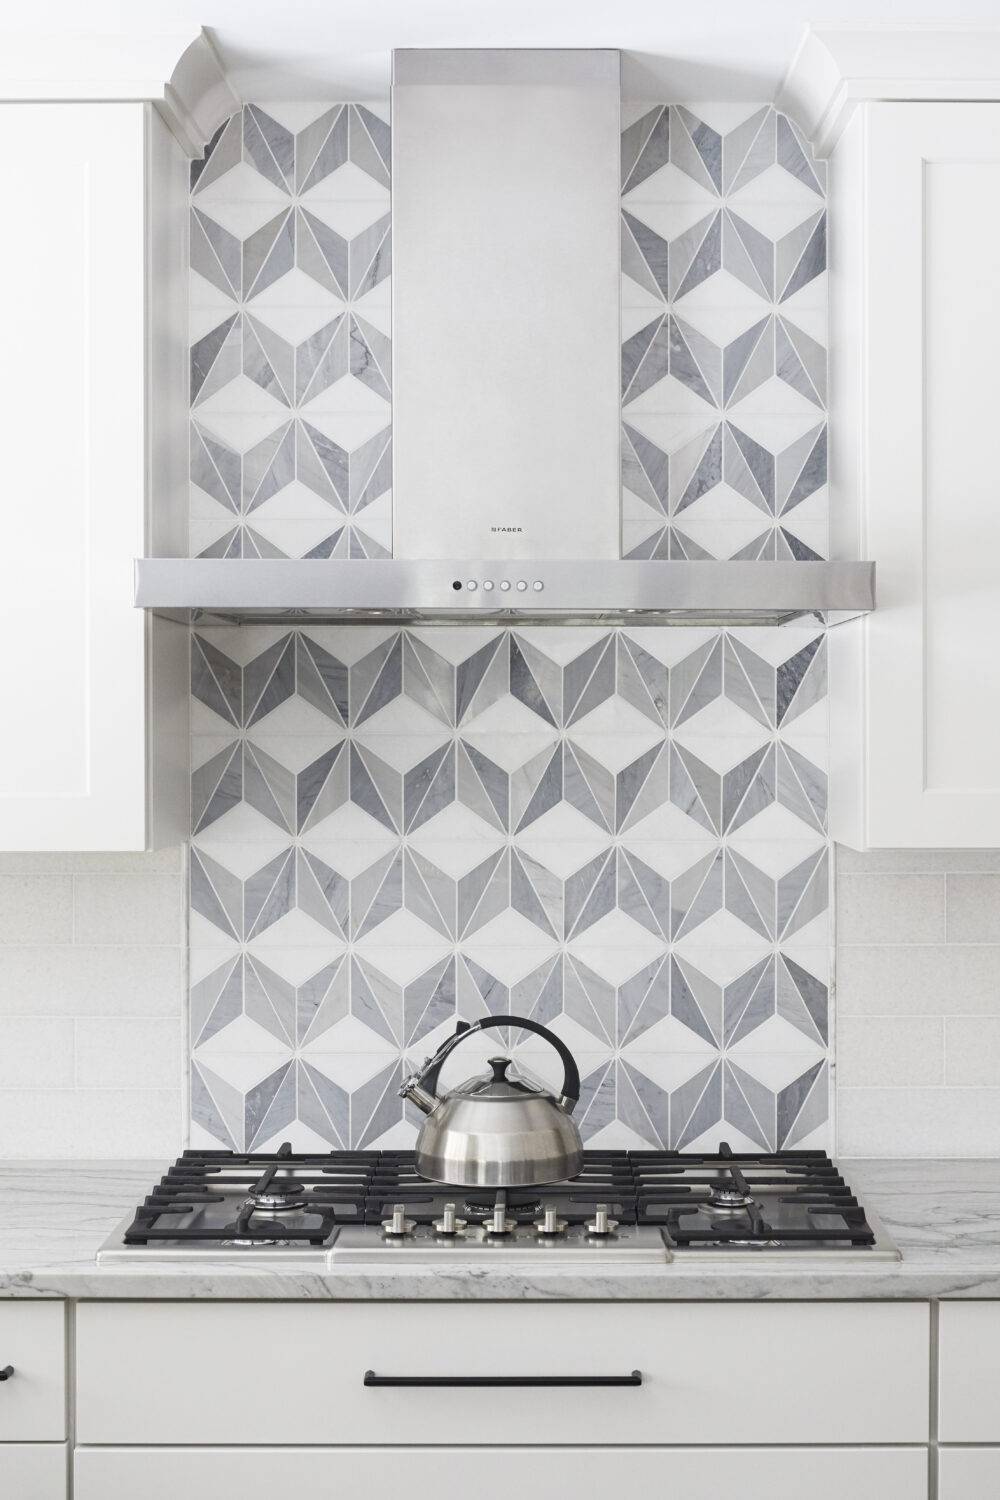 White and grey tile in a pattern kitchen stove backsplash.